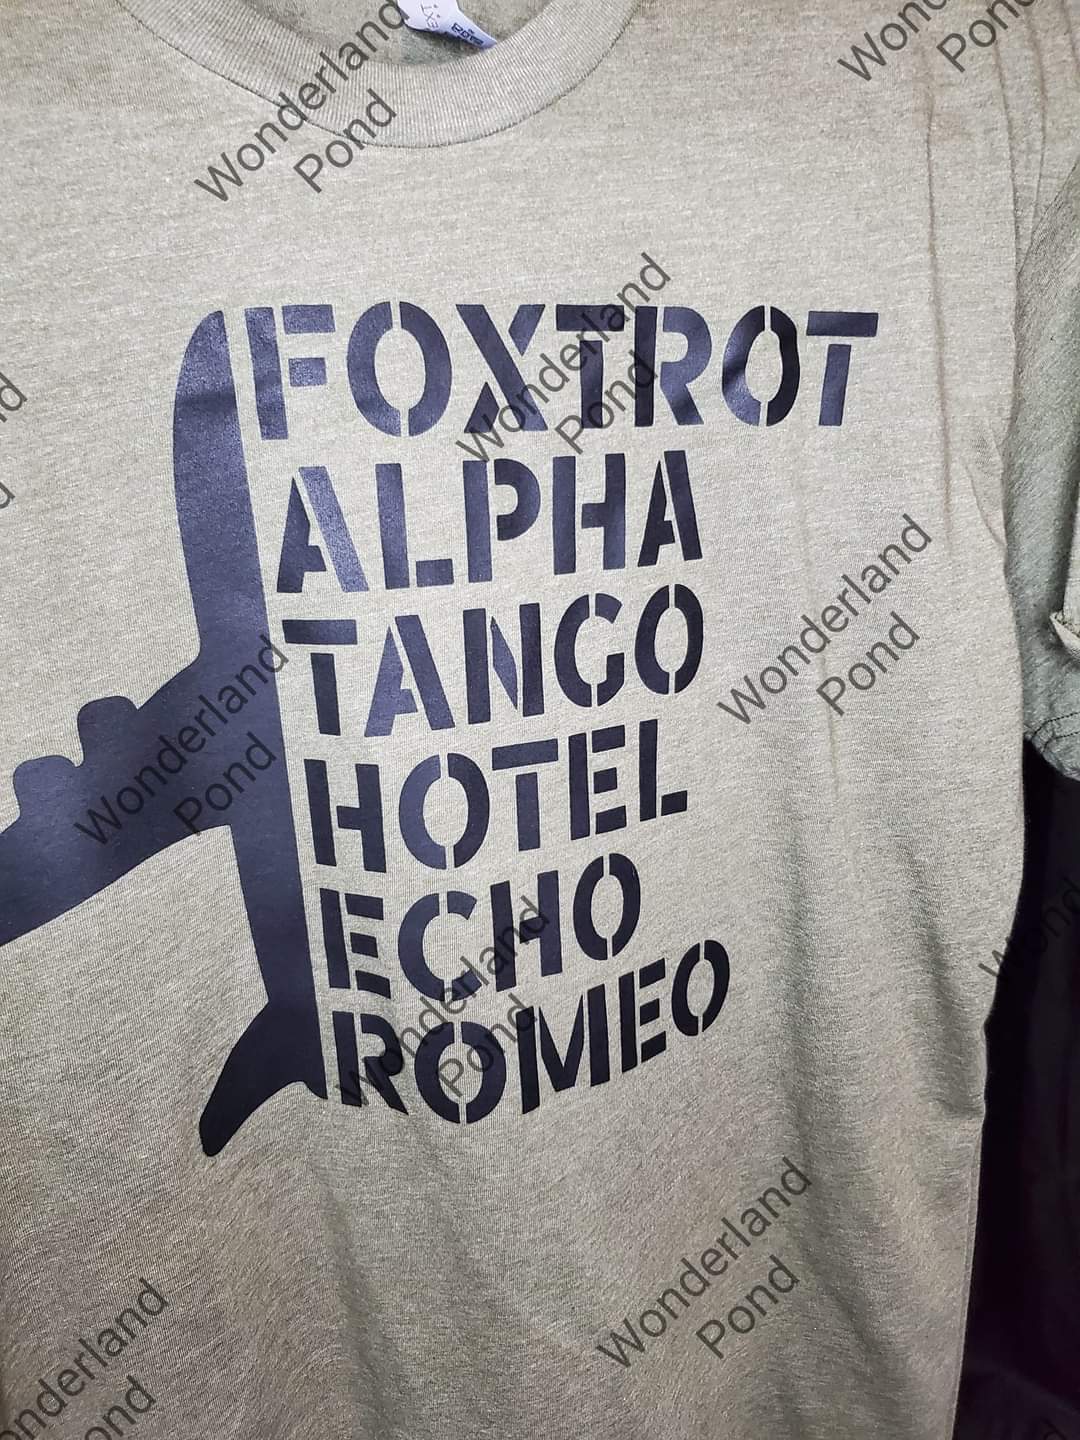 Foxtrot Alpha Tango Hotel Echo Romeo (Limited Edition)